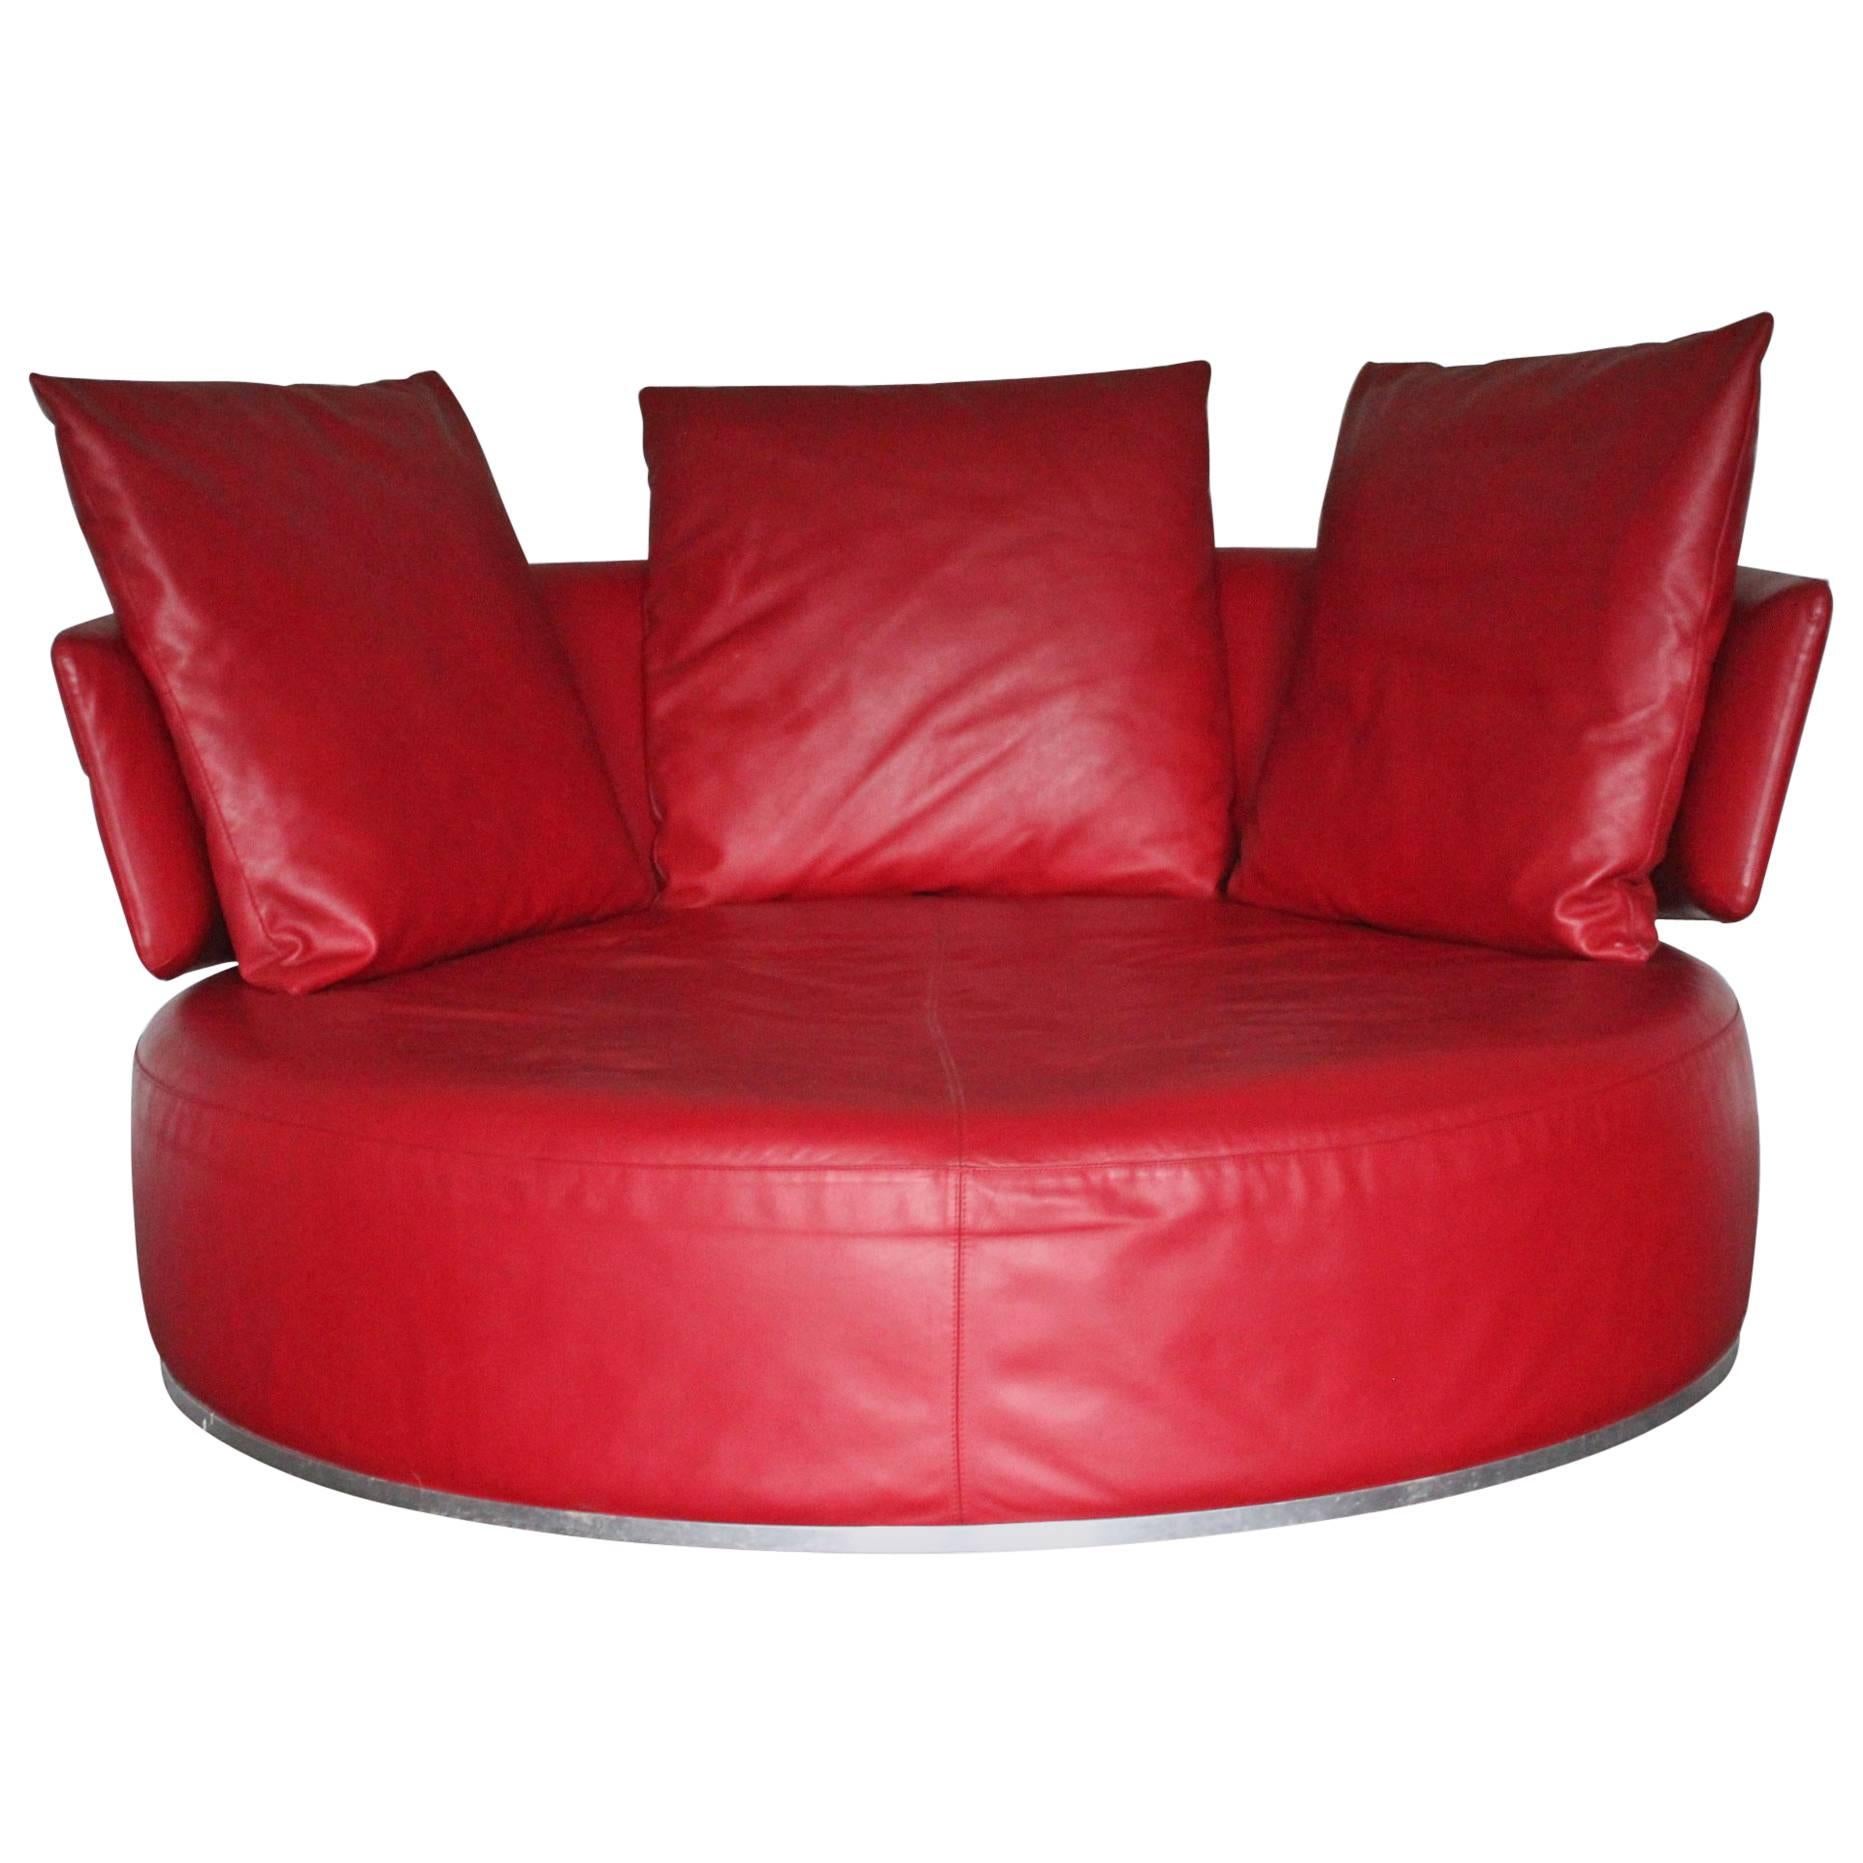 B&B Italia "Amoenus" Round Circular Ottoman Sofa in Red "Pelle" Leather